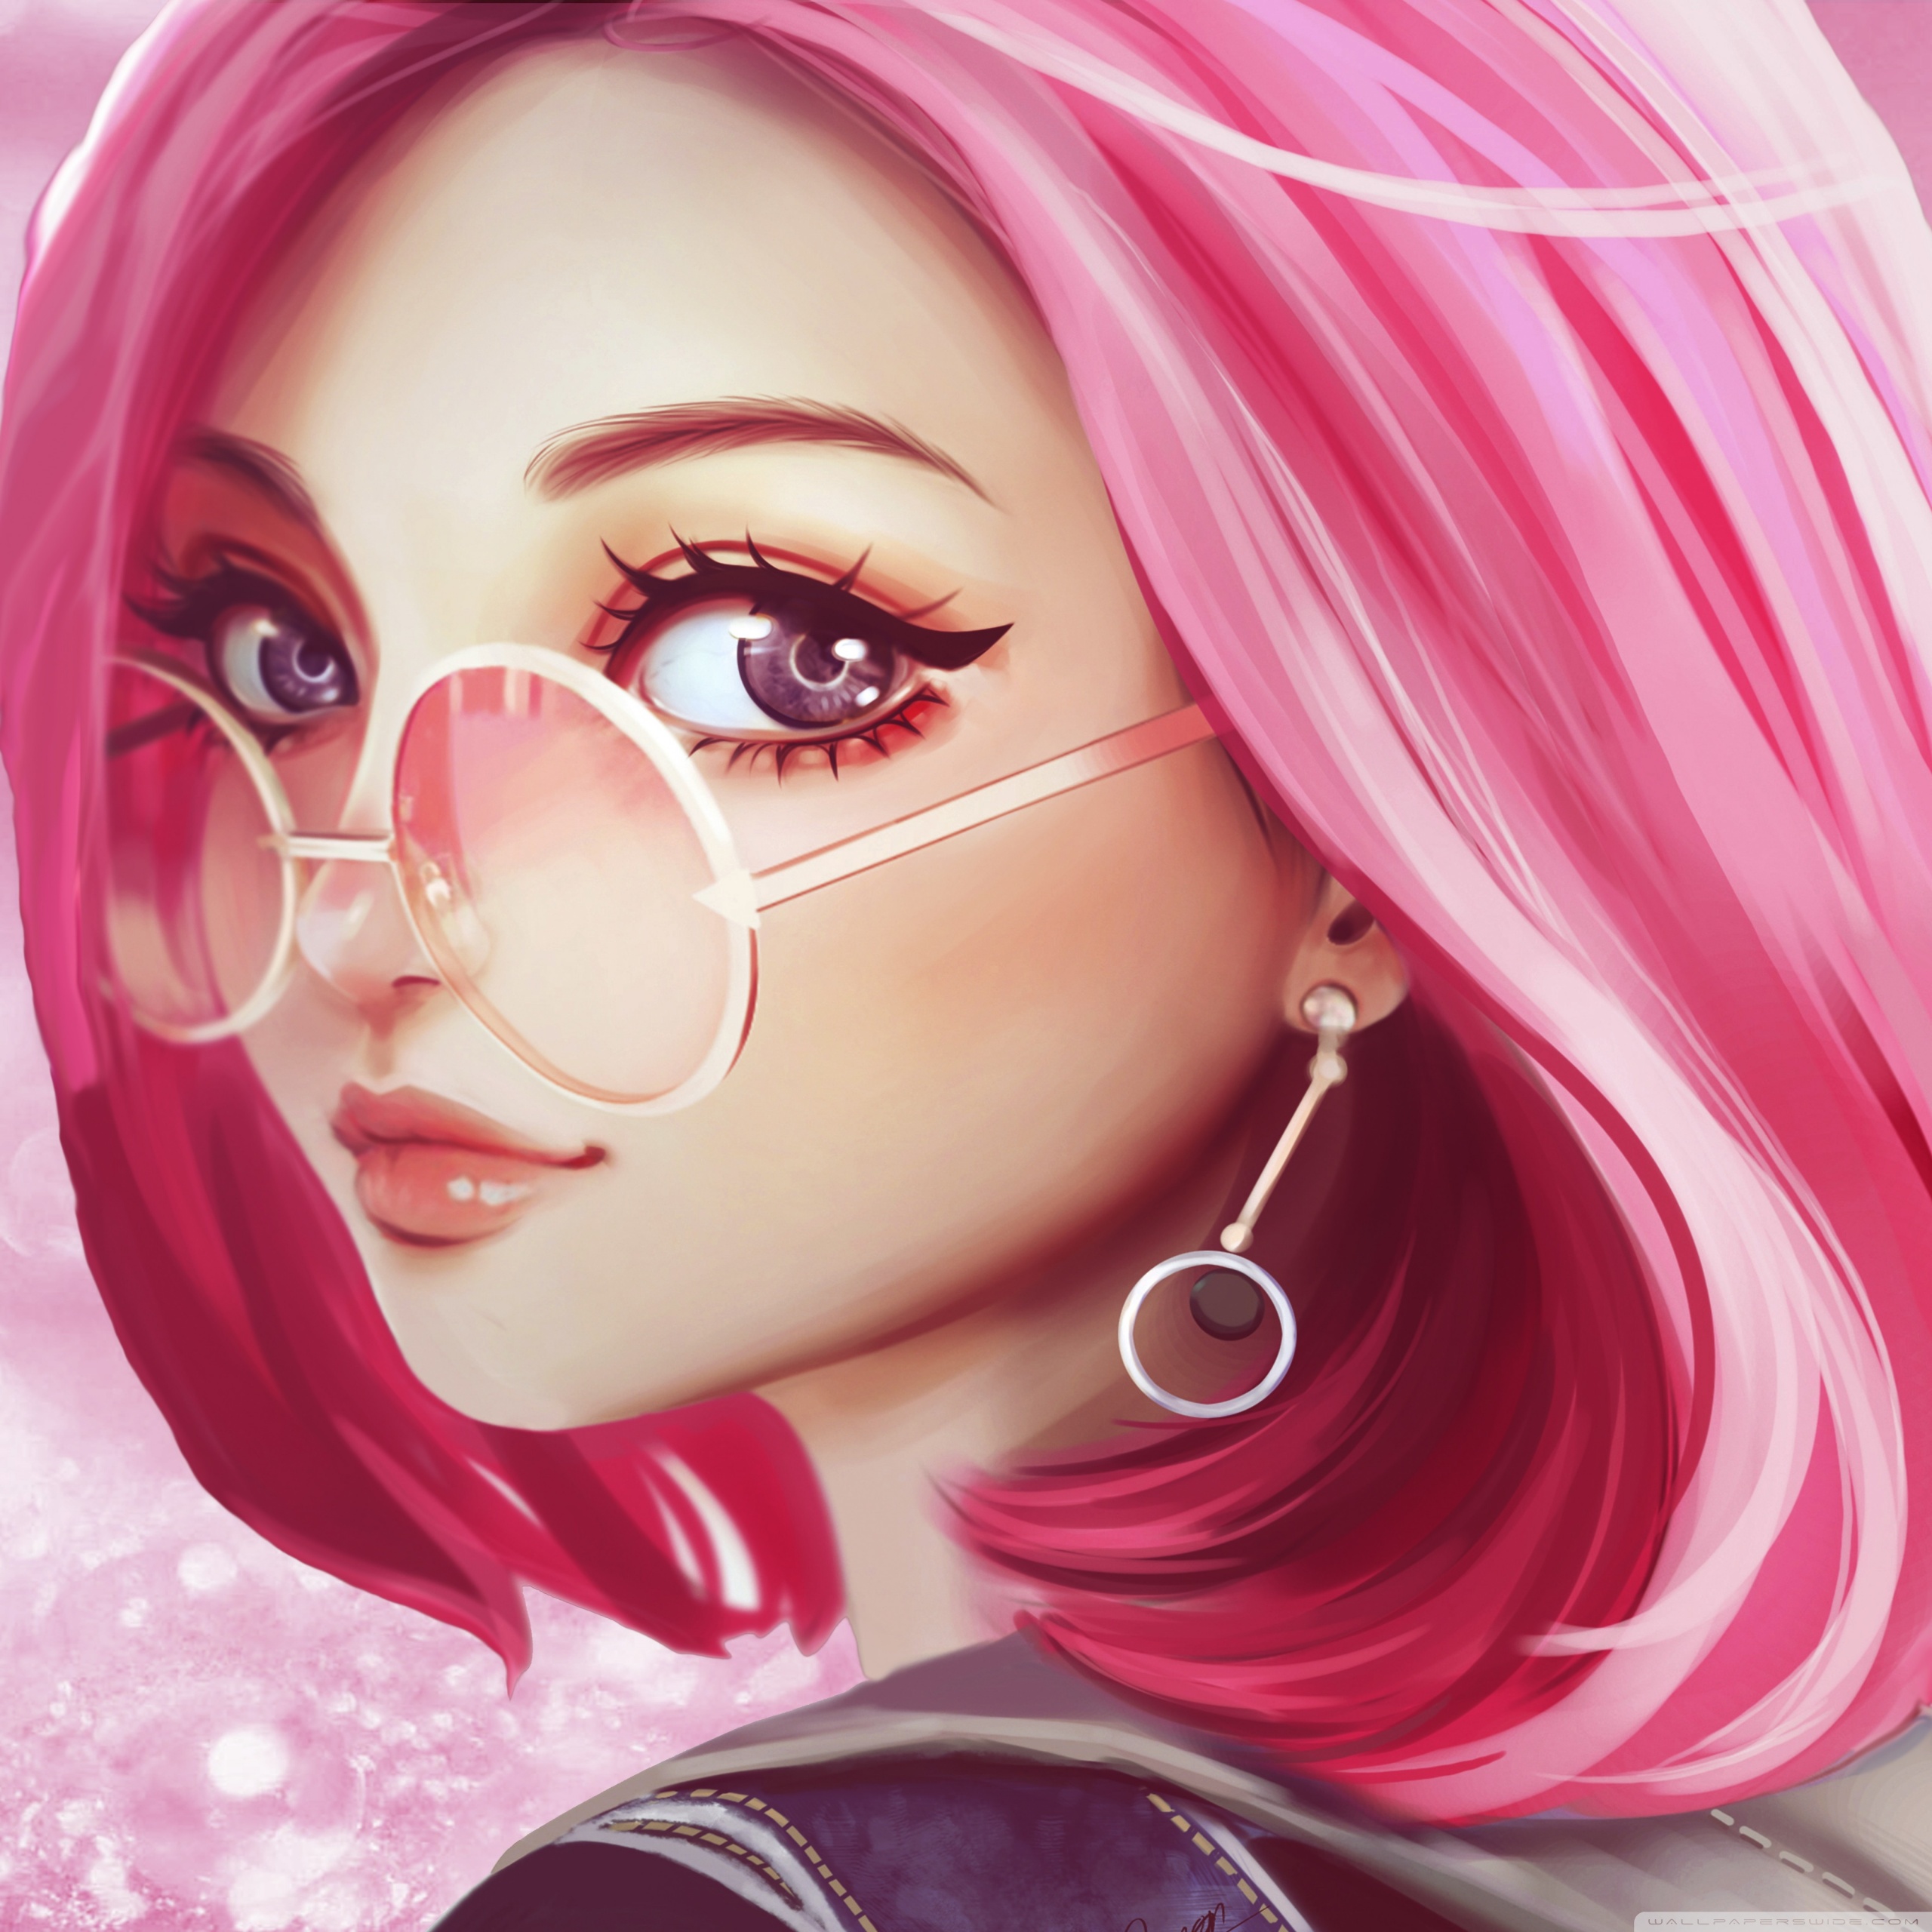 Tablet 1 - - Pink Hair Girl Art (#980049) - HD Wallpaper & Backgrounds ...